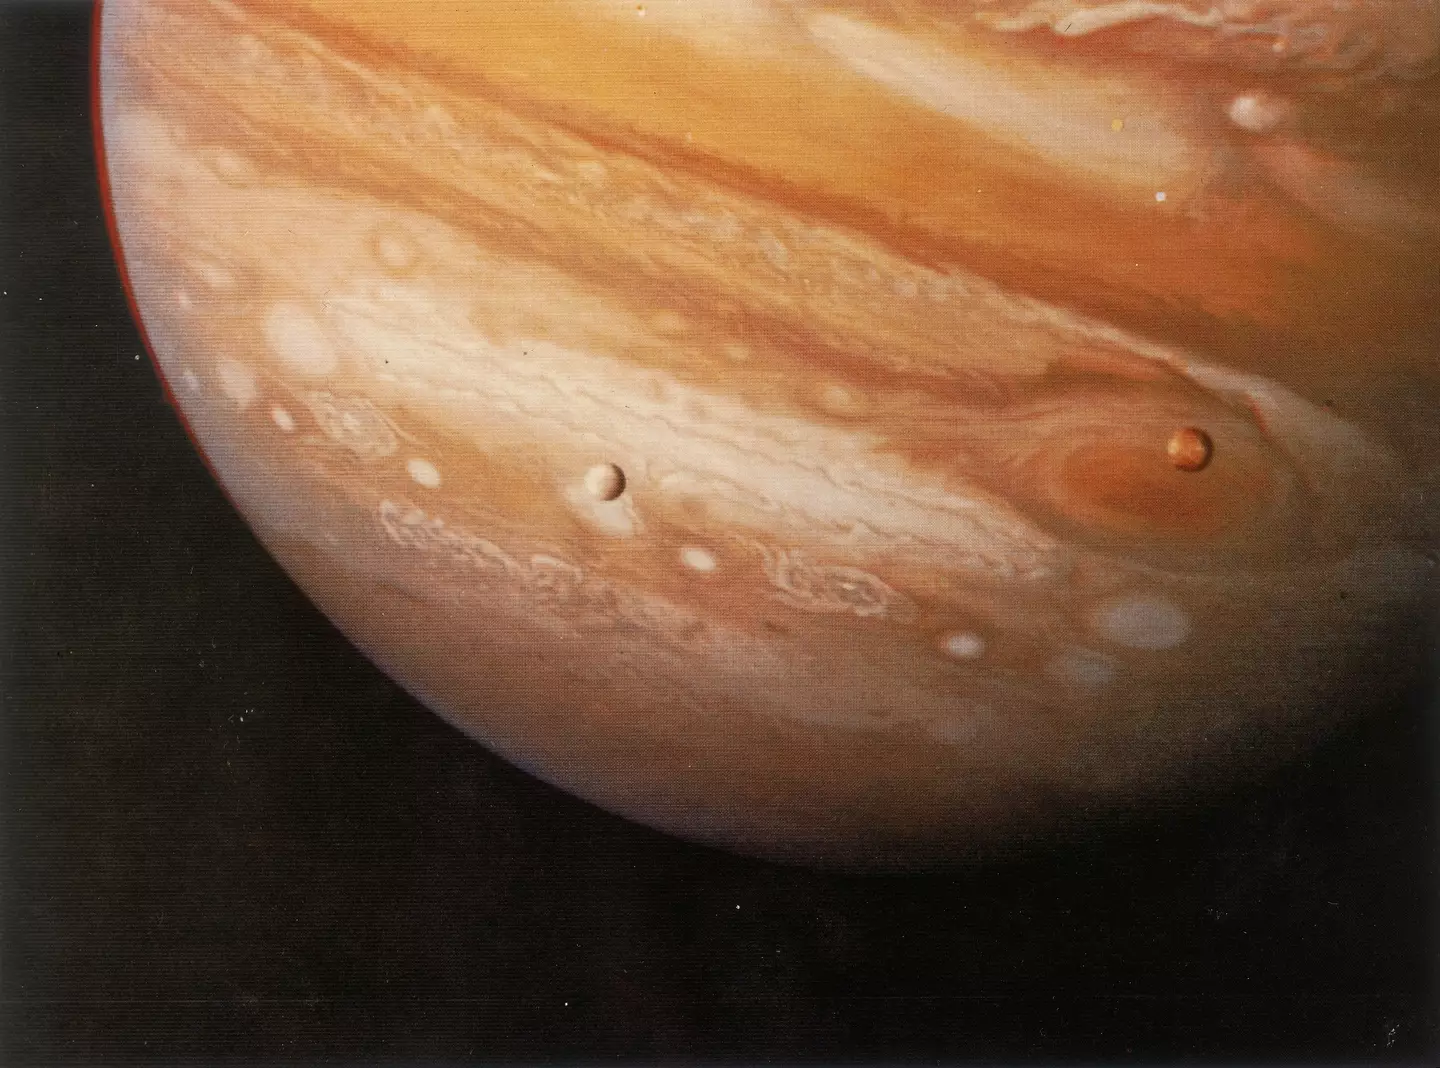 A photo of Jupiter taken by Voyager.